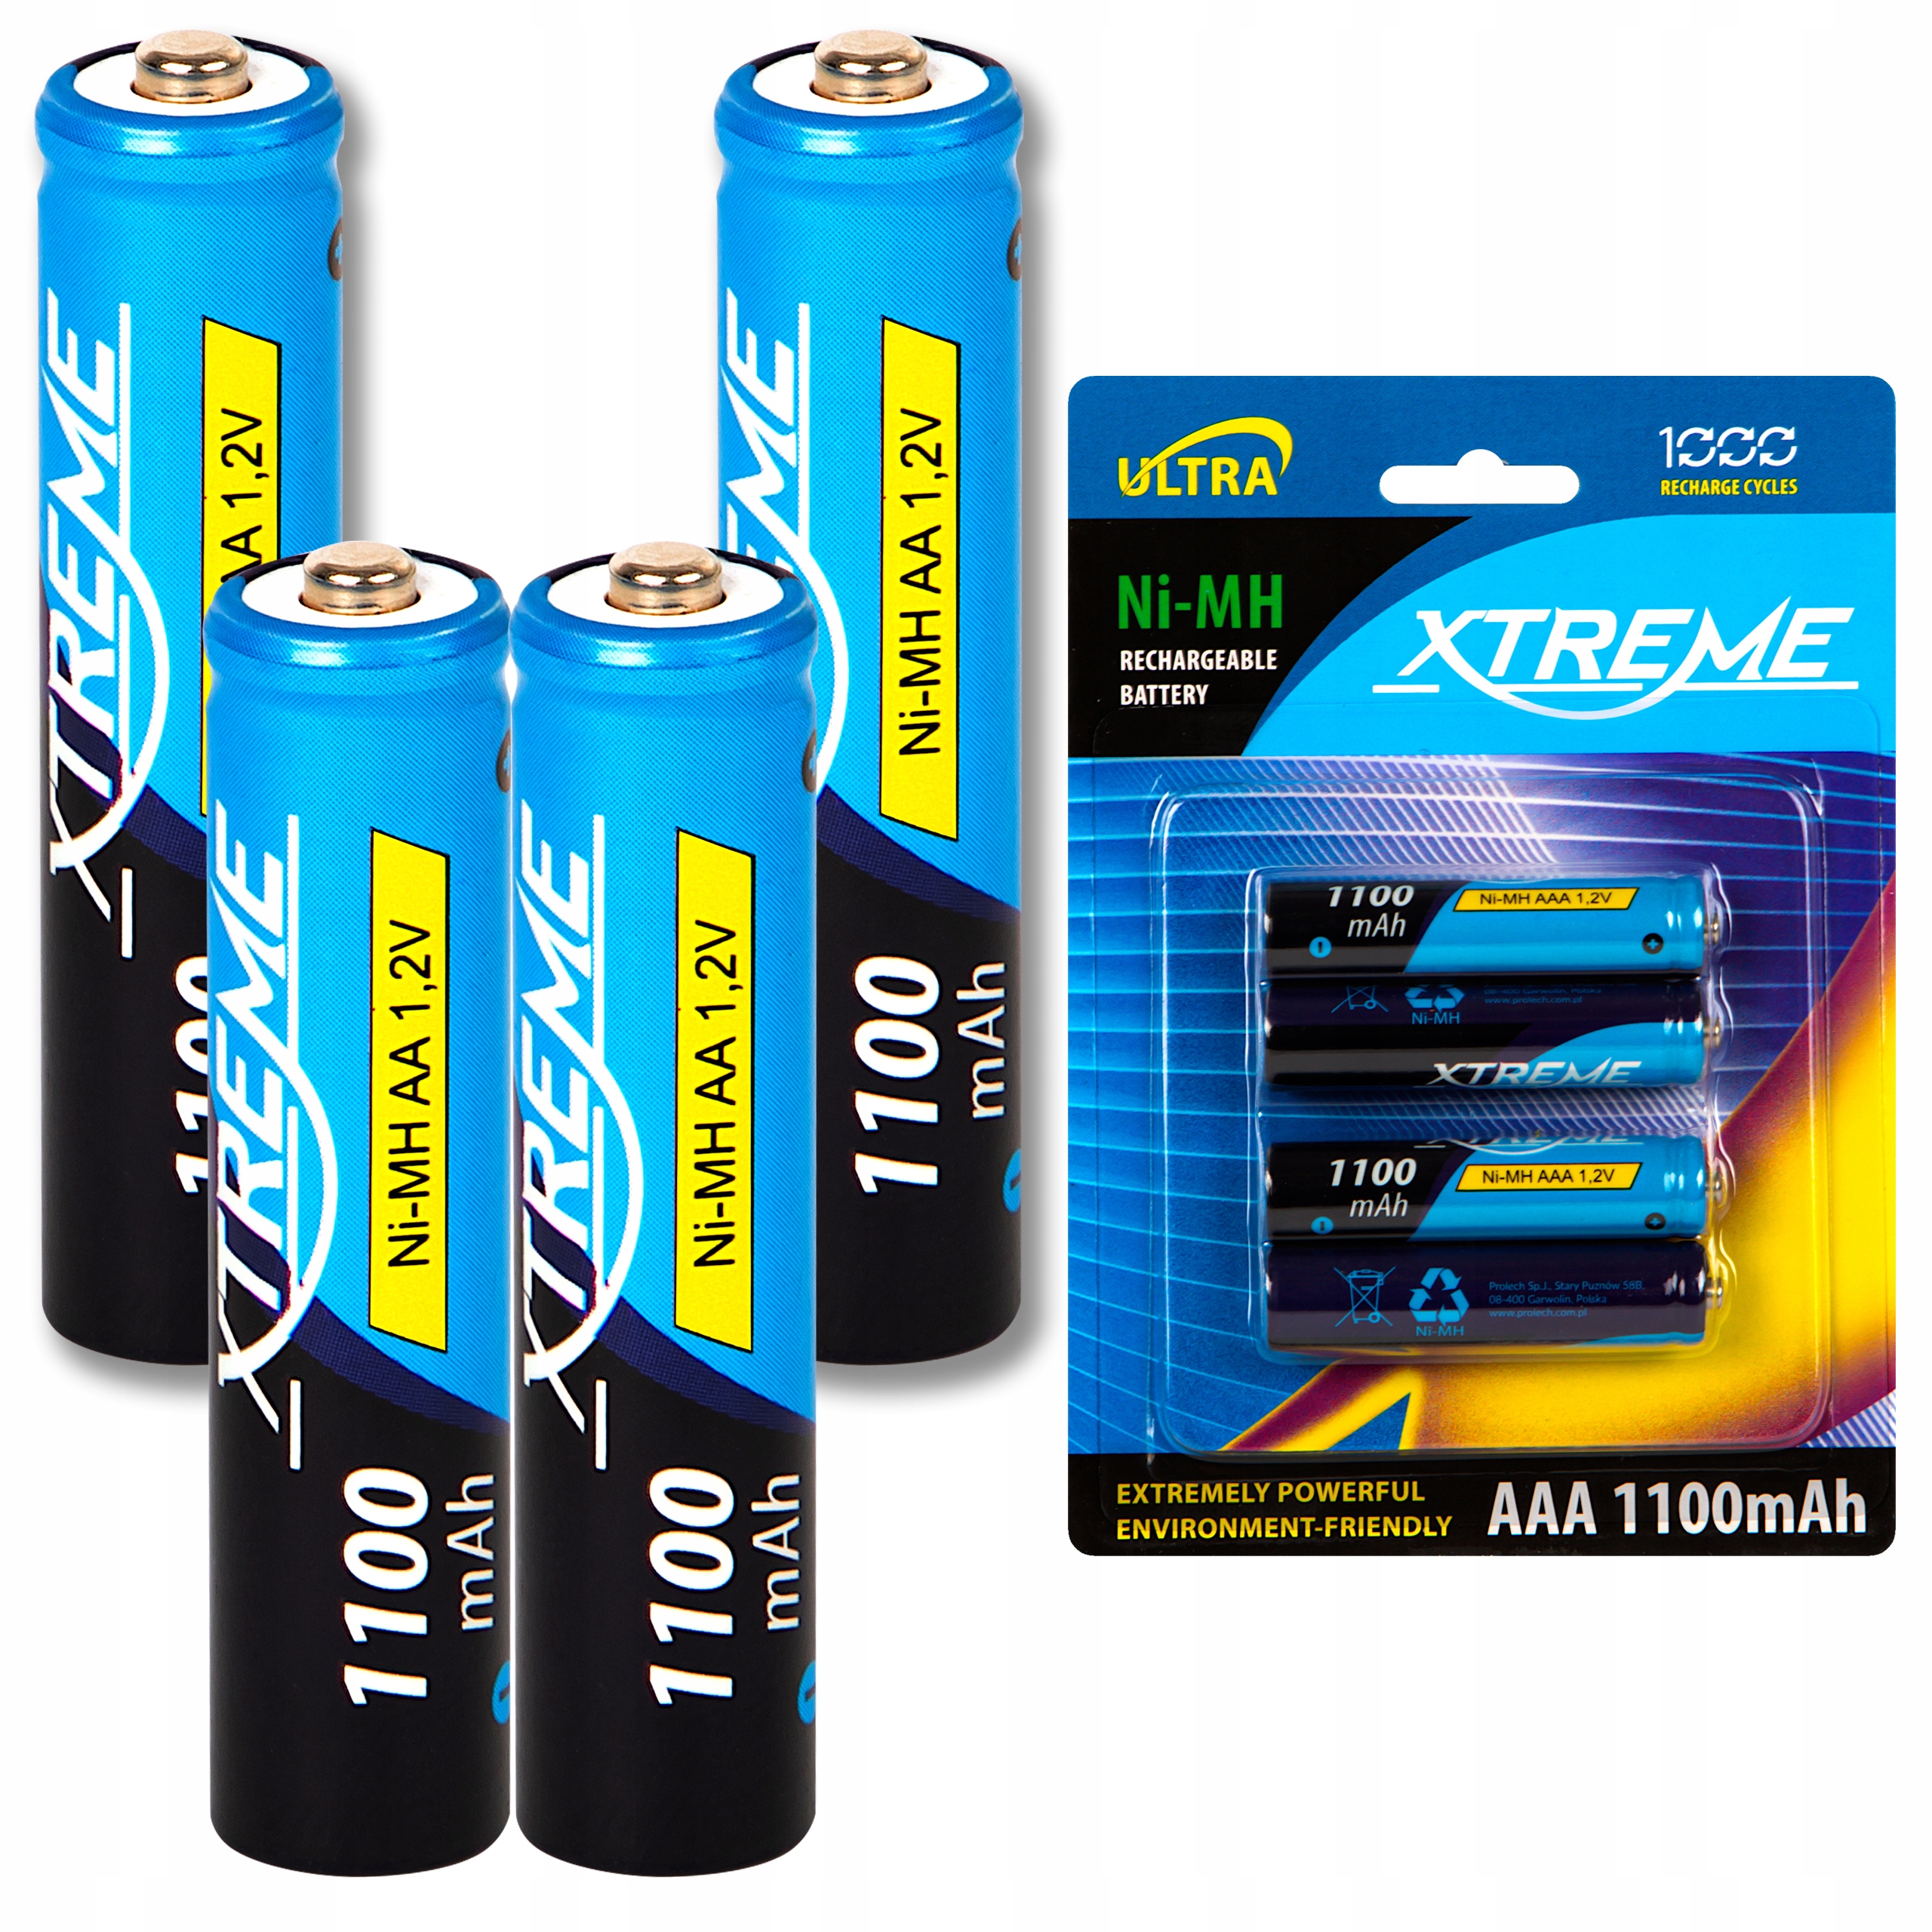 NiMH 8,4V 1100mAh battery GFC - Batteries